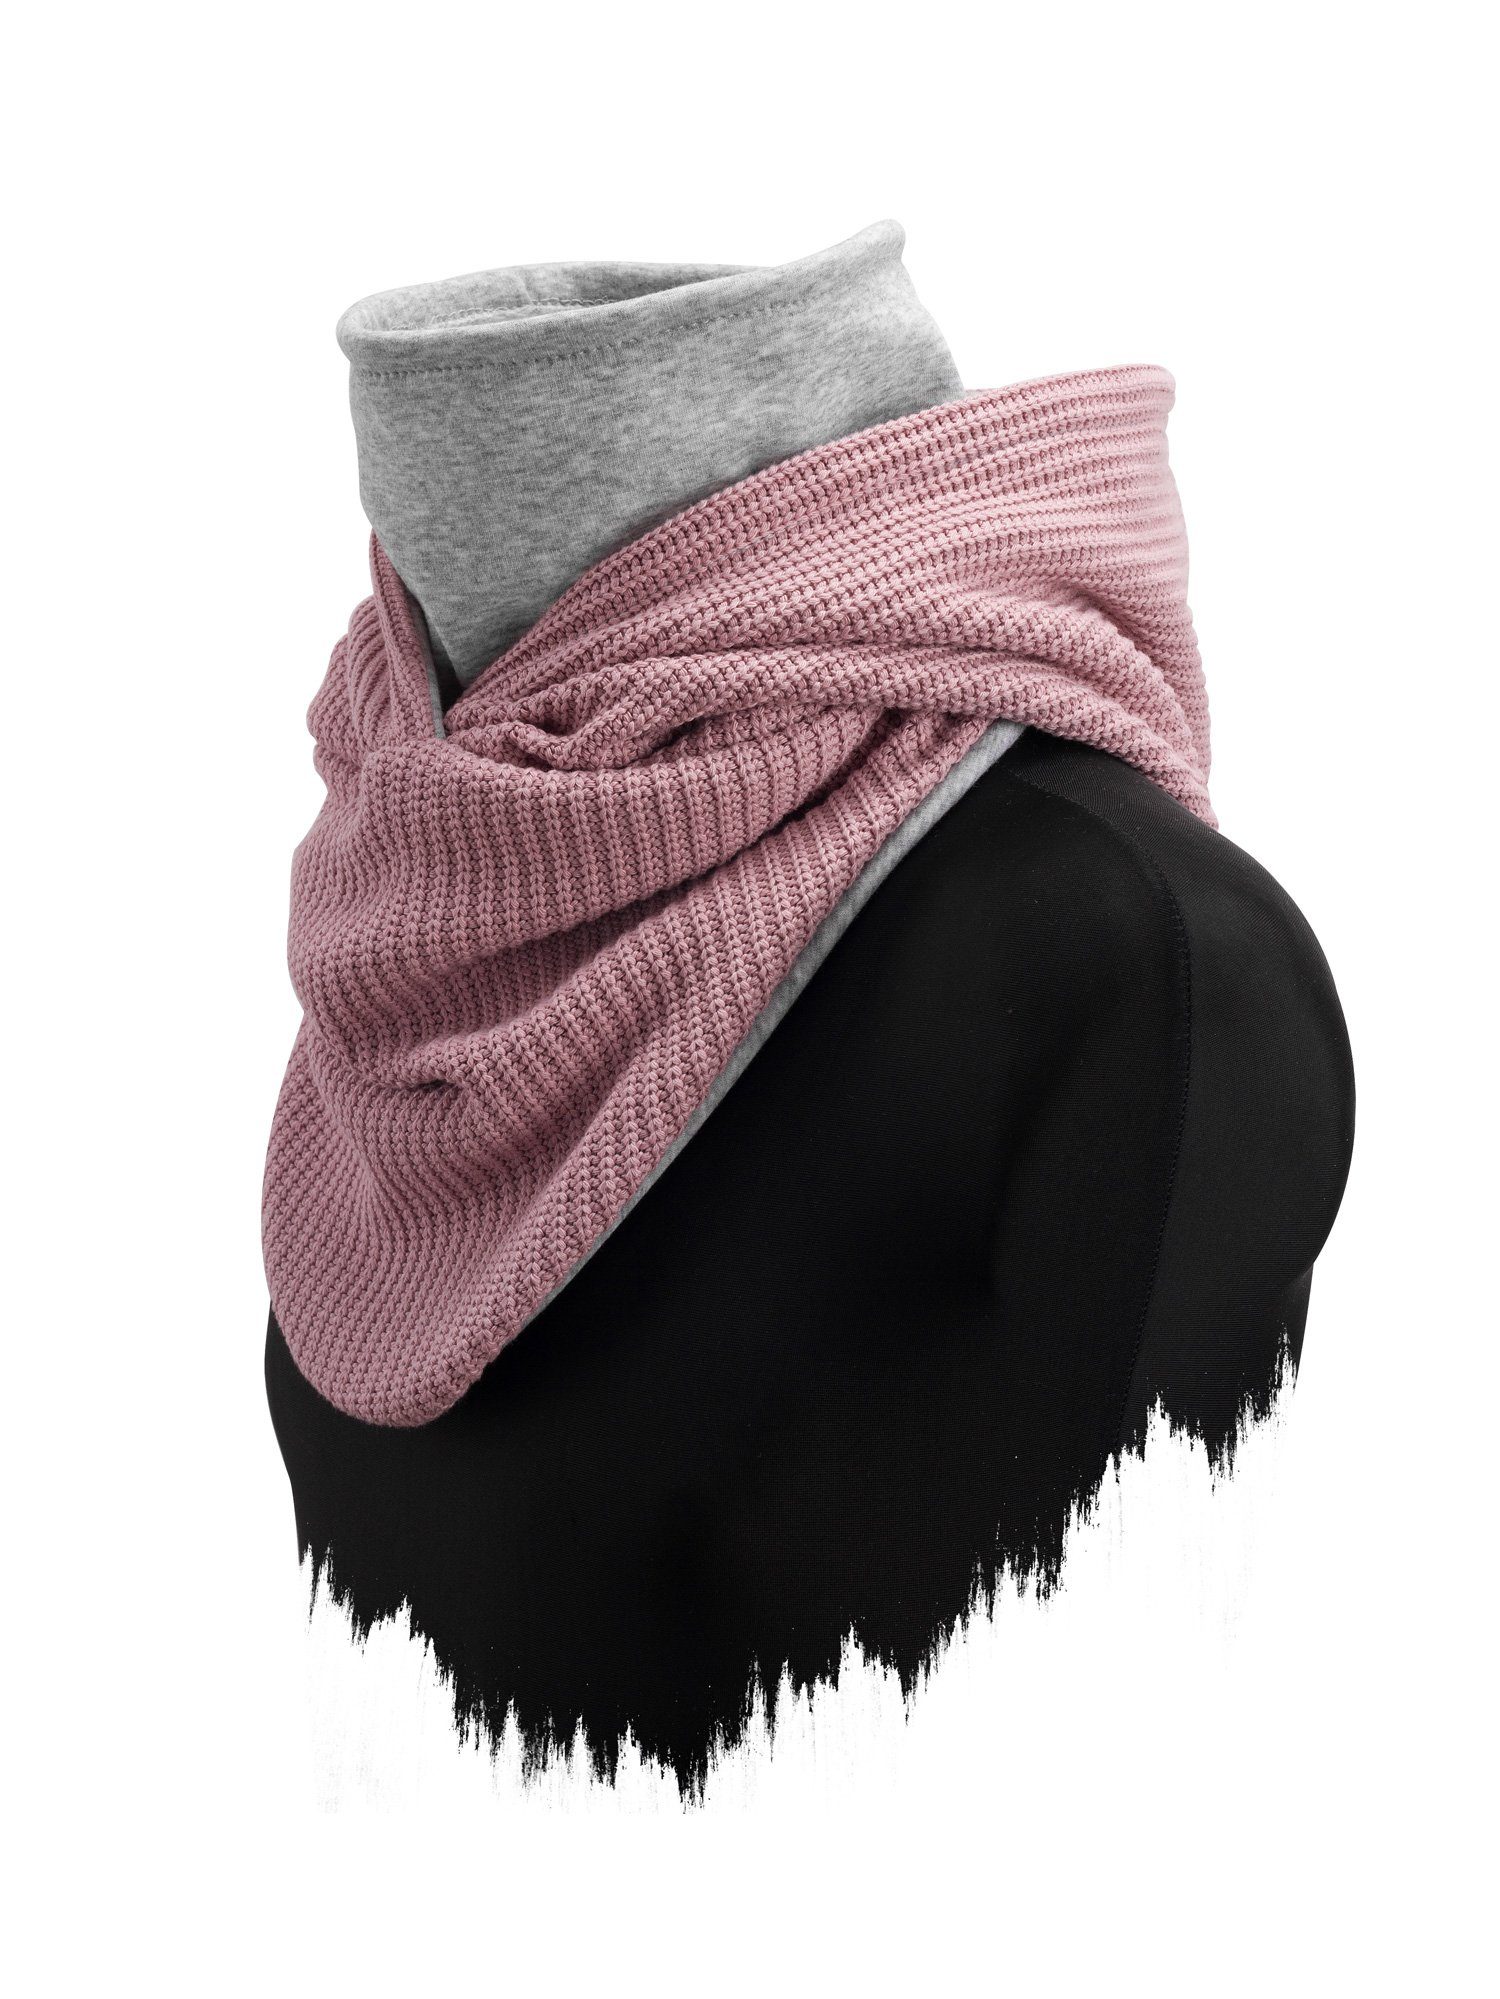 Windbreaker Schal, Hooded integriertem Modeschal Loop Kapuzenschal, mit - Rose Strickschal, Knit Manufaktur13